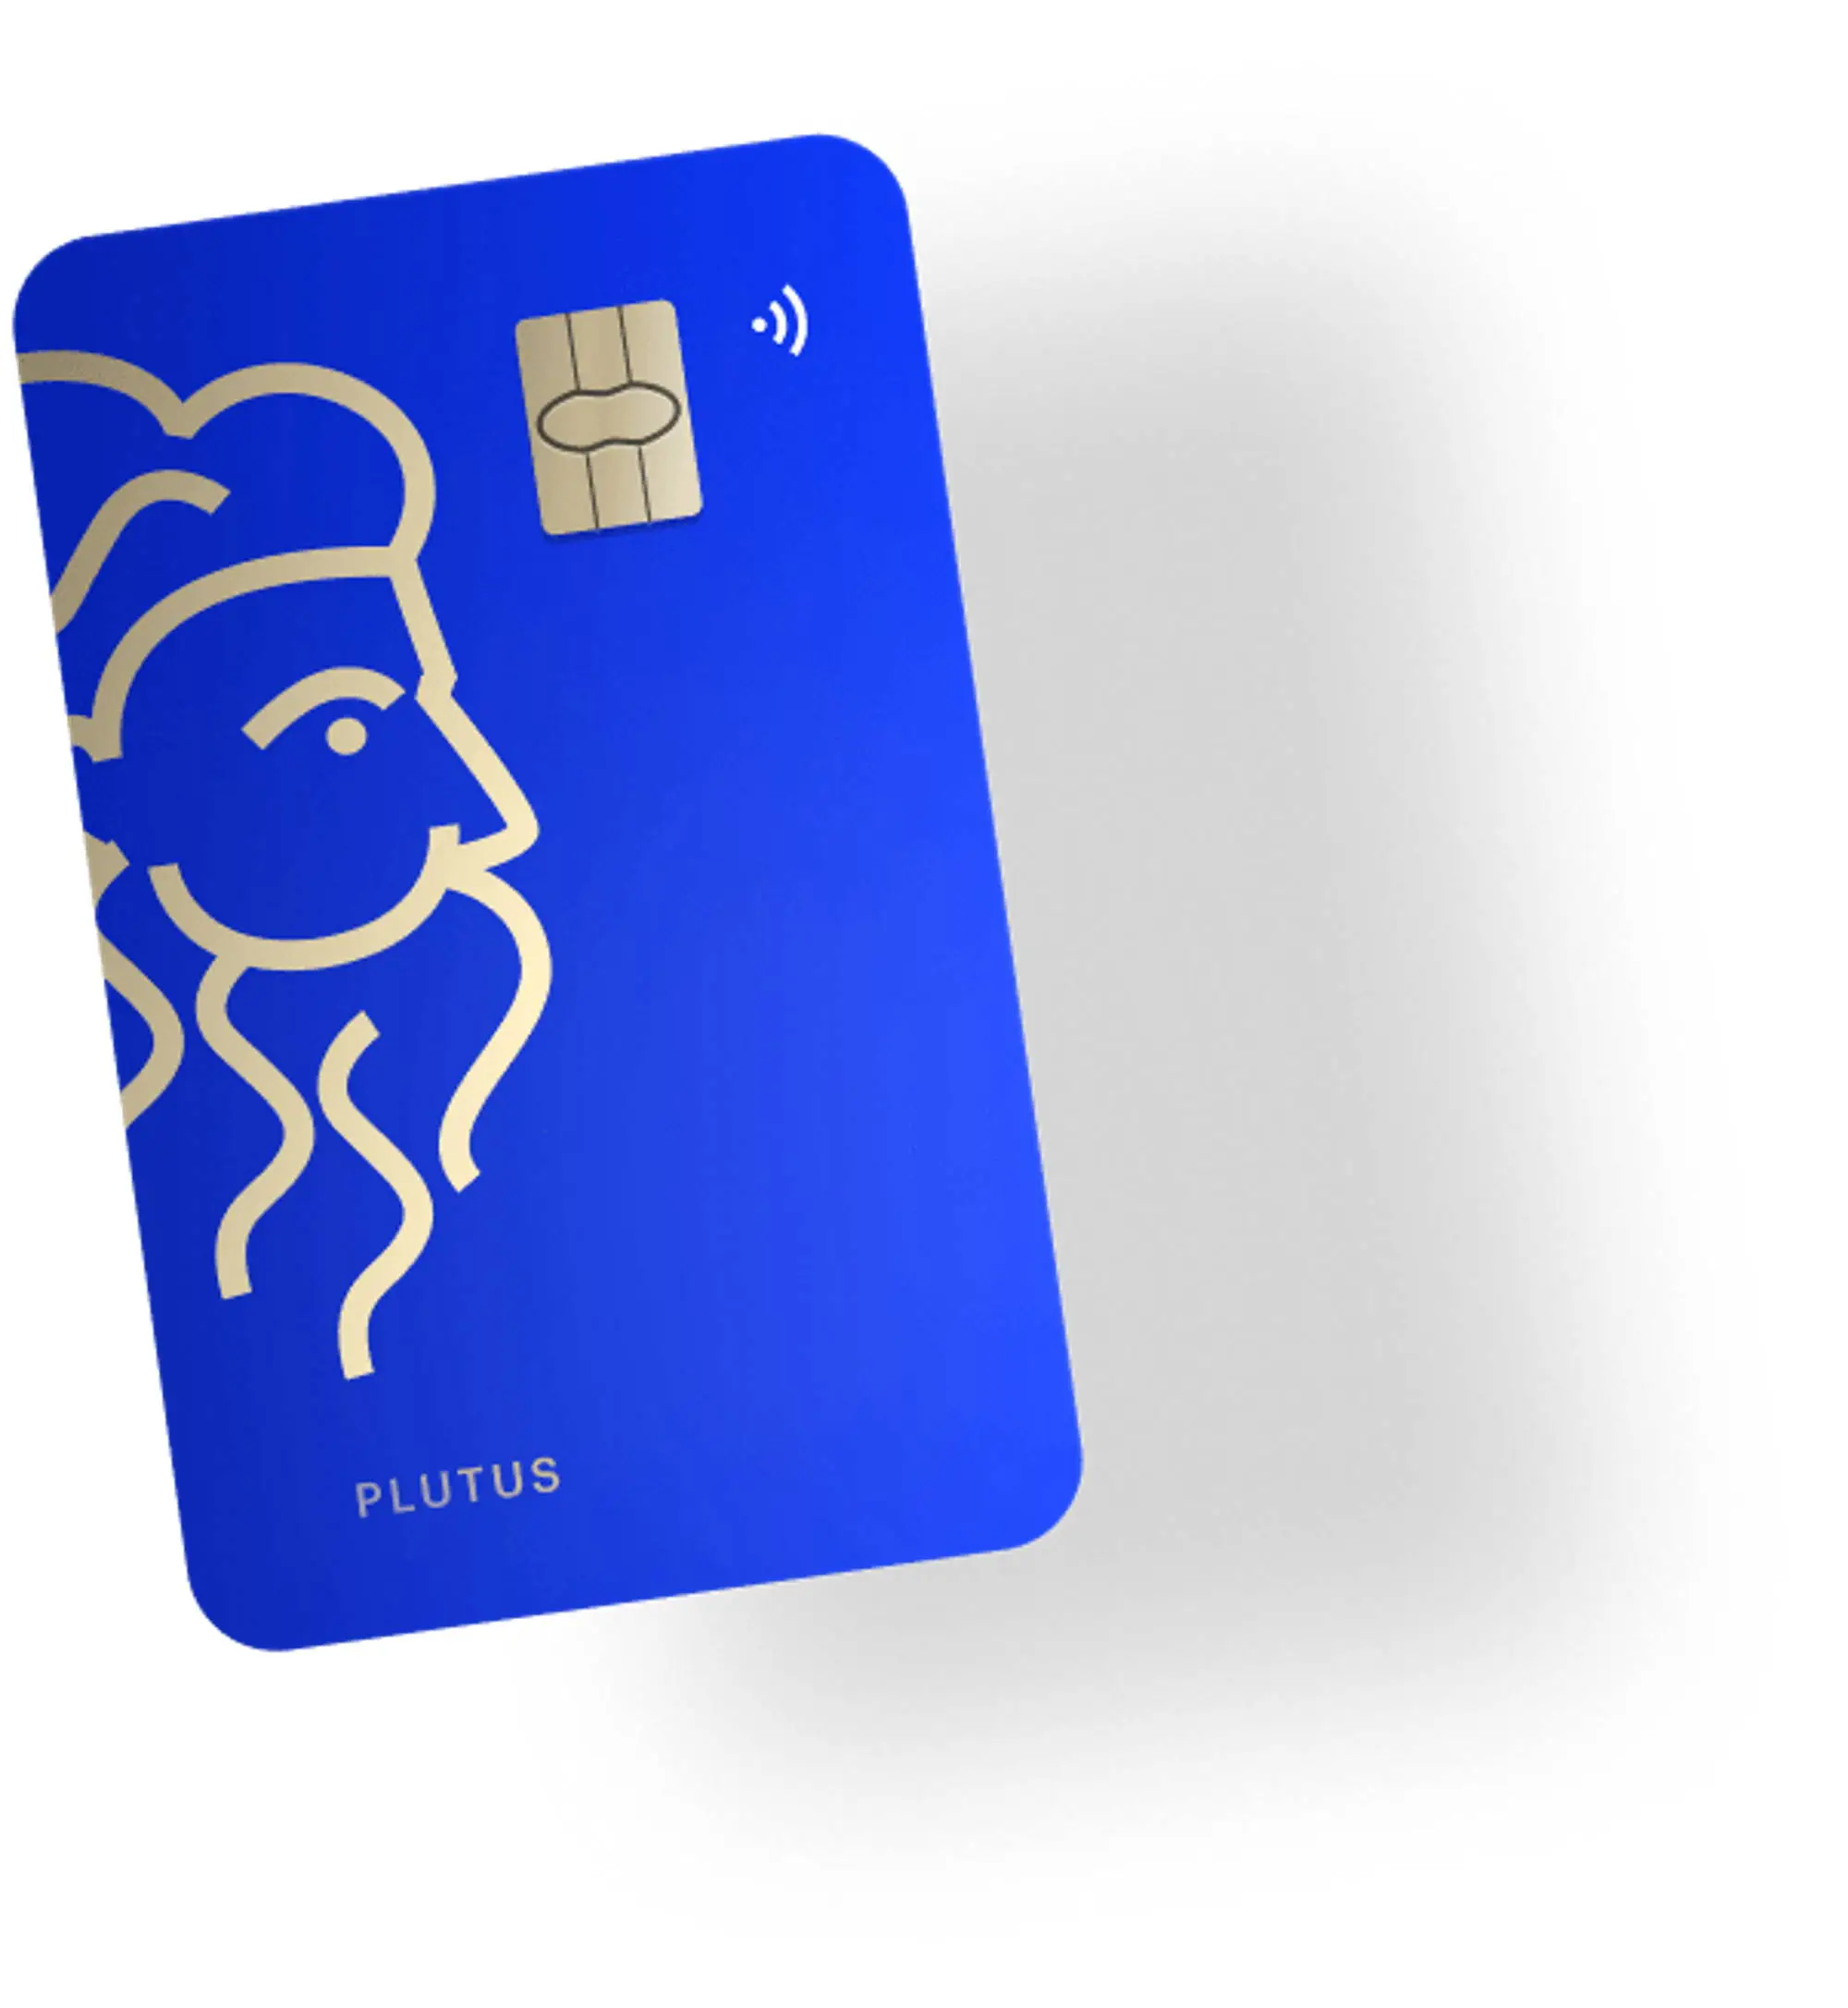 Plutus Card Cashback Experience